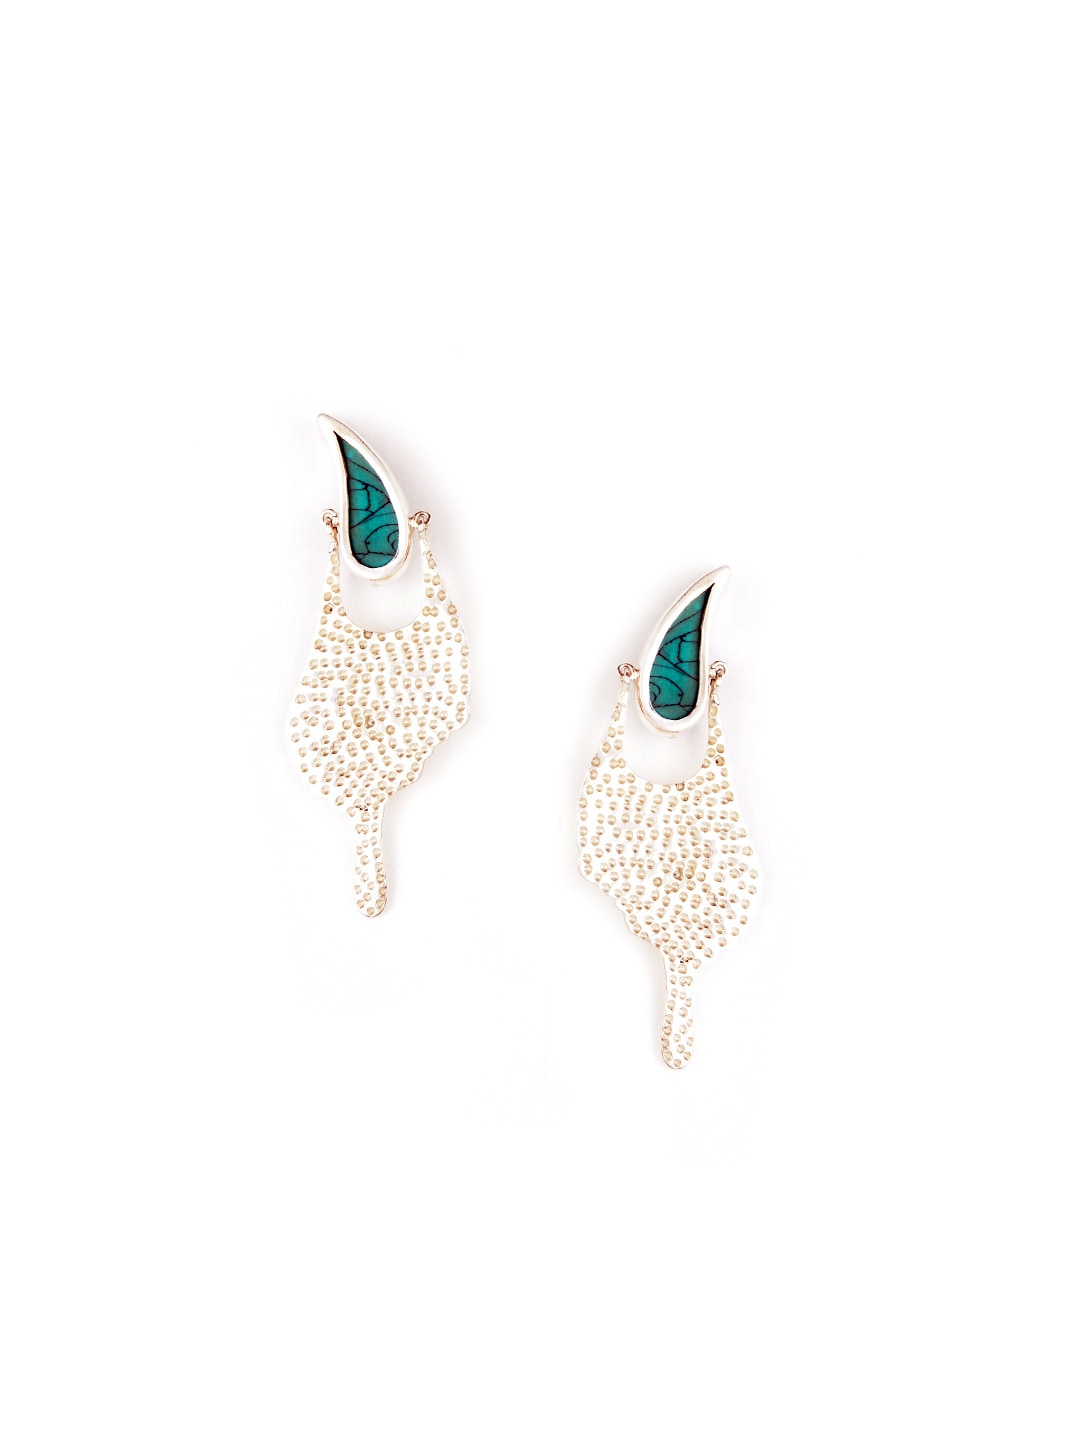 Rreverie Silver & Green Earrings